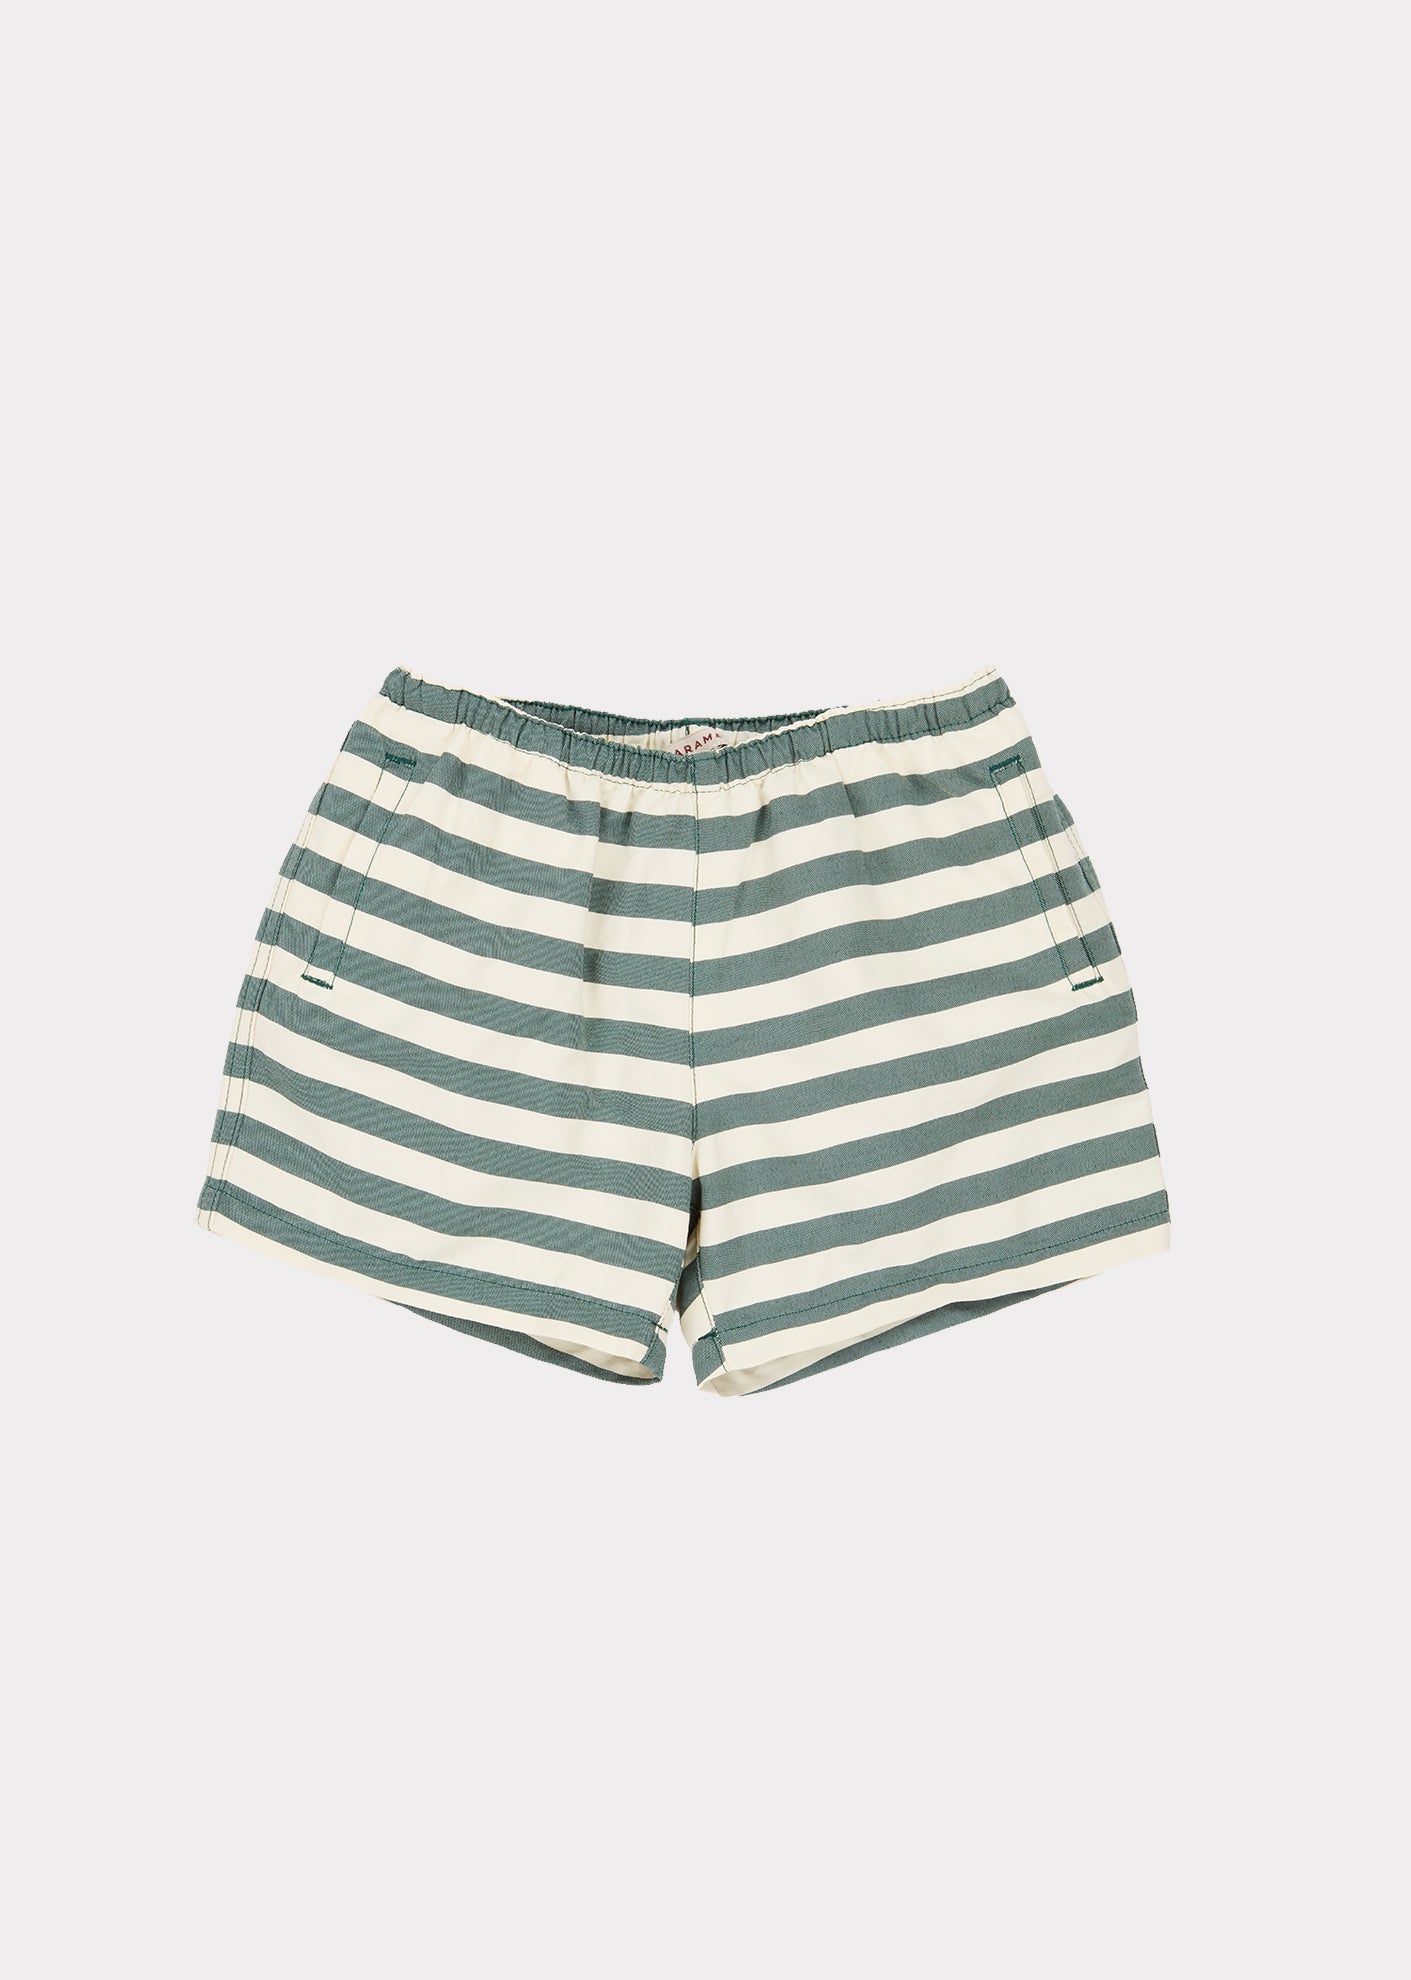 Boys Green Striped Swim Shorts